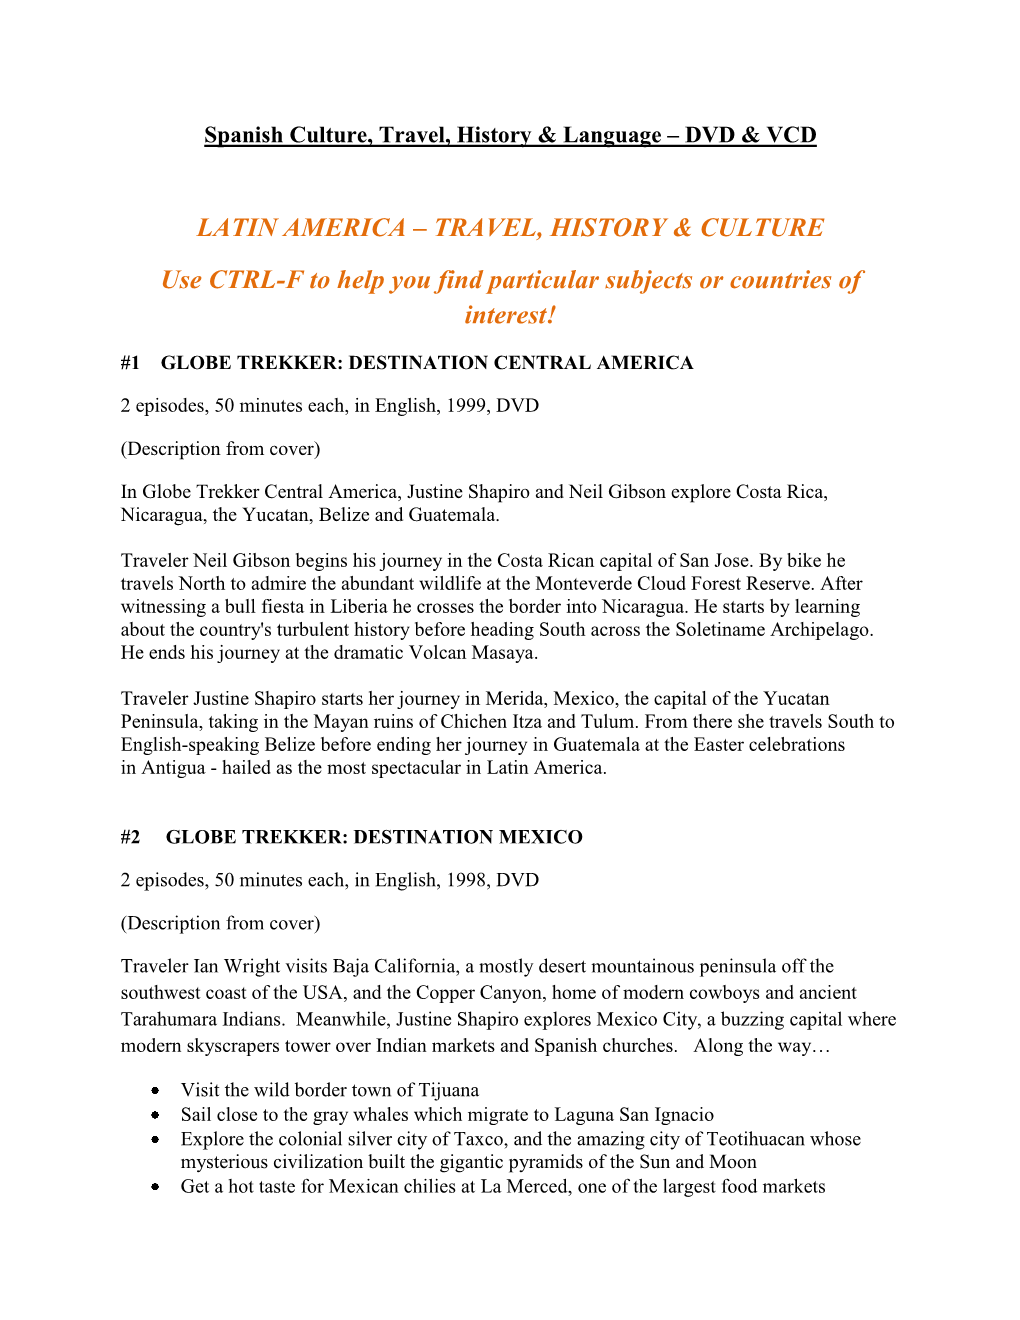 LATIN AMERICA – TRAVEL, HISTORY & CULTURE Use CTRL